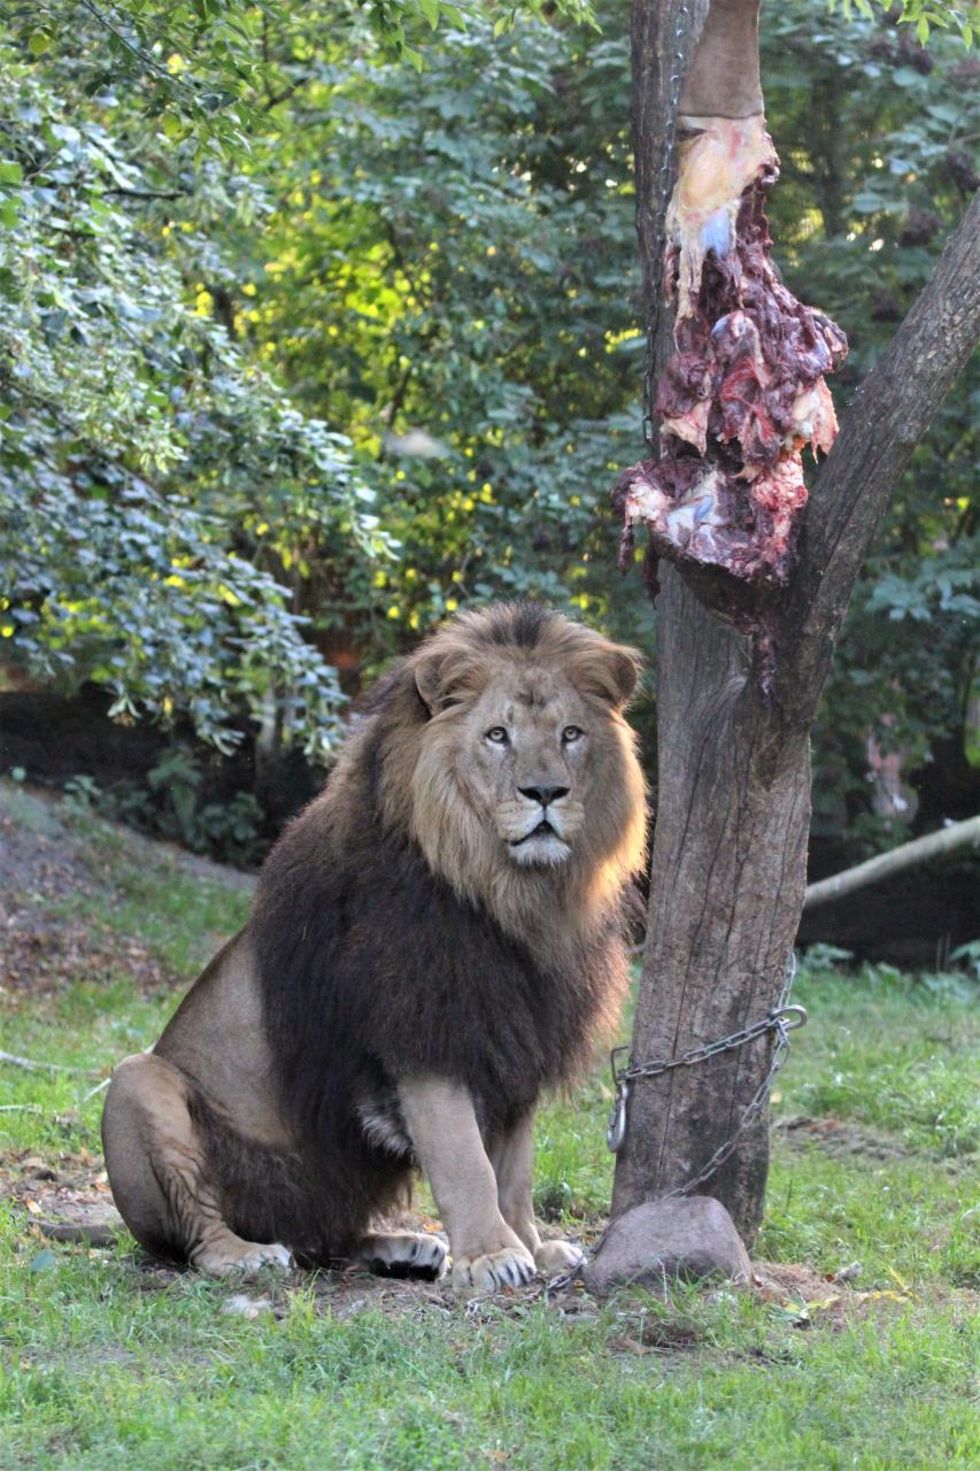 Lion Mufassa guards his food